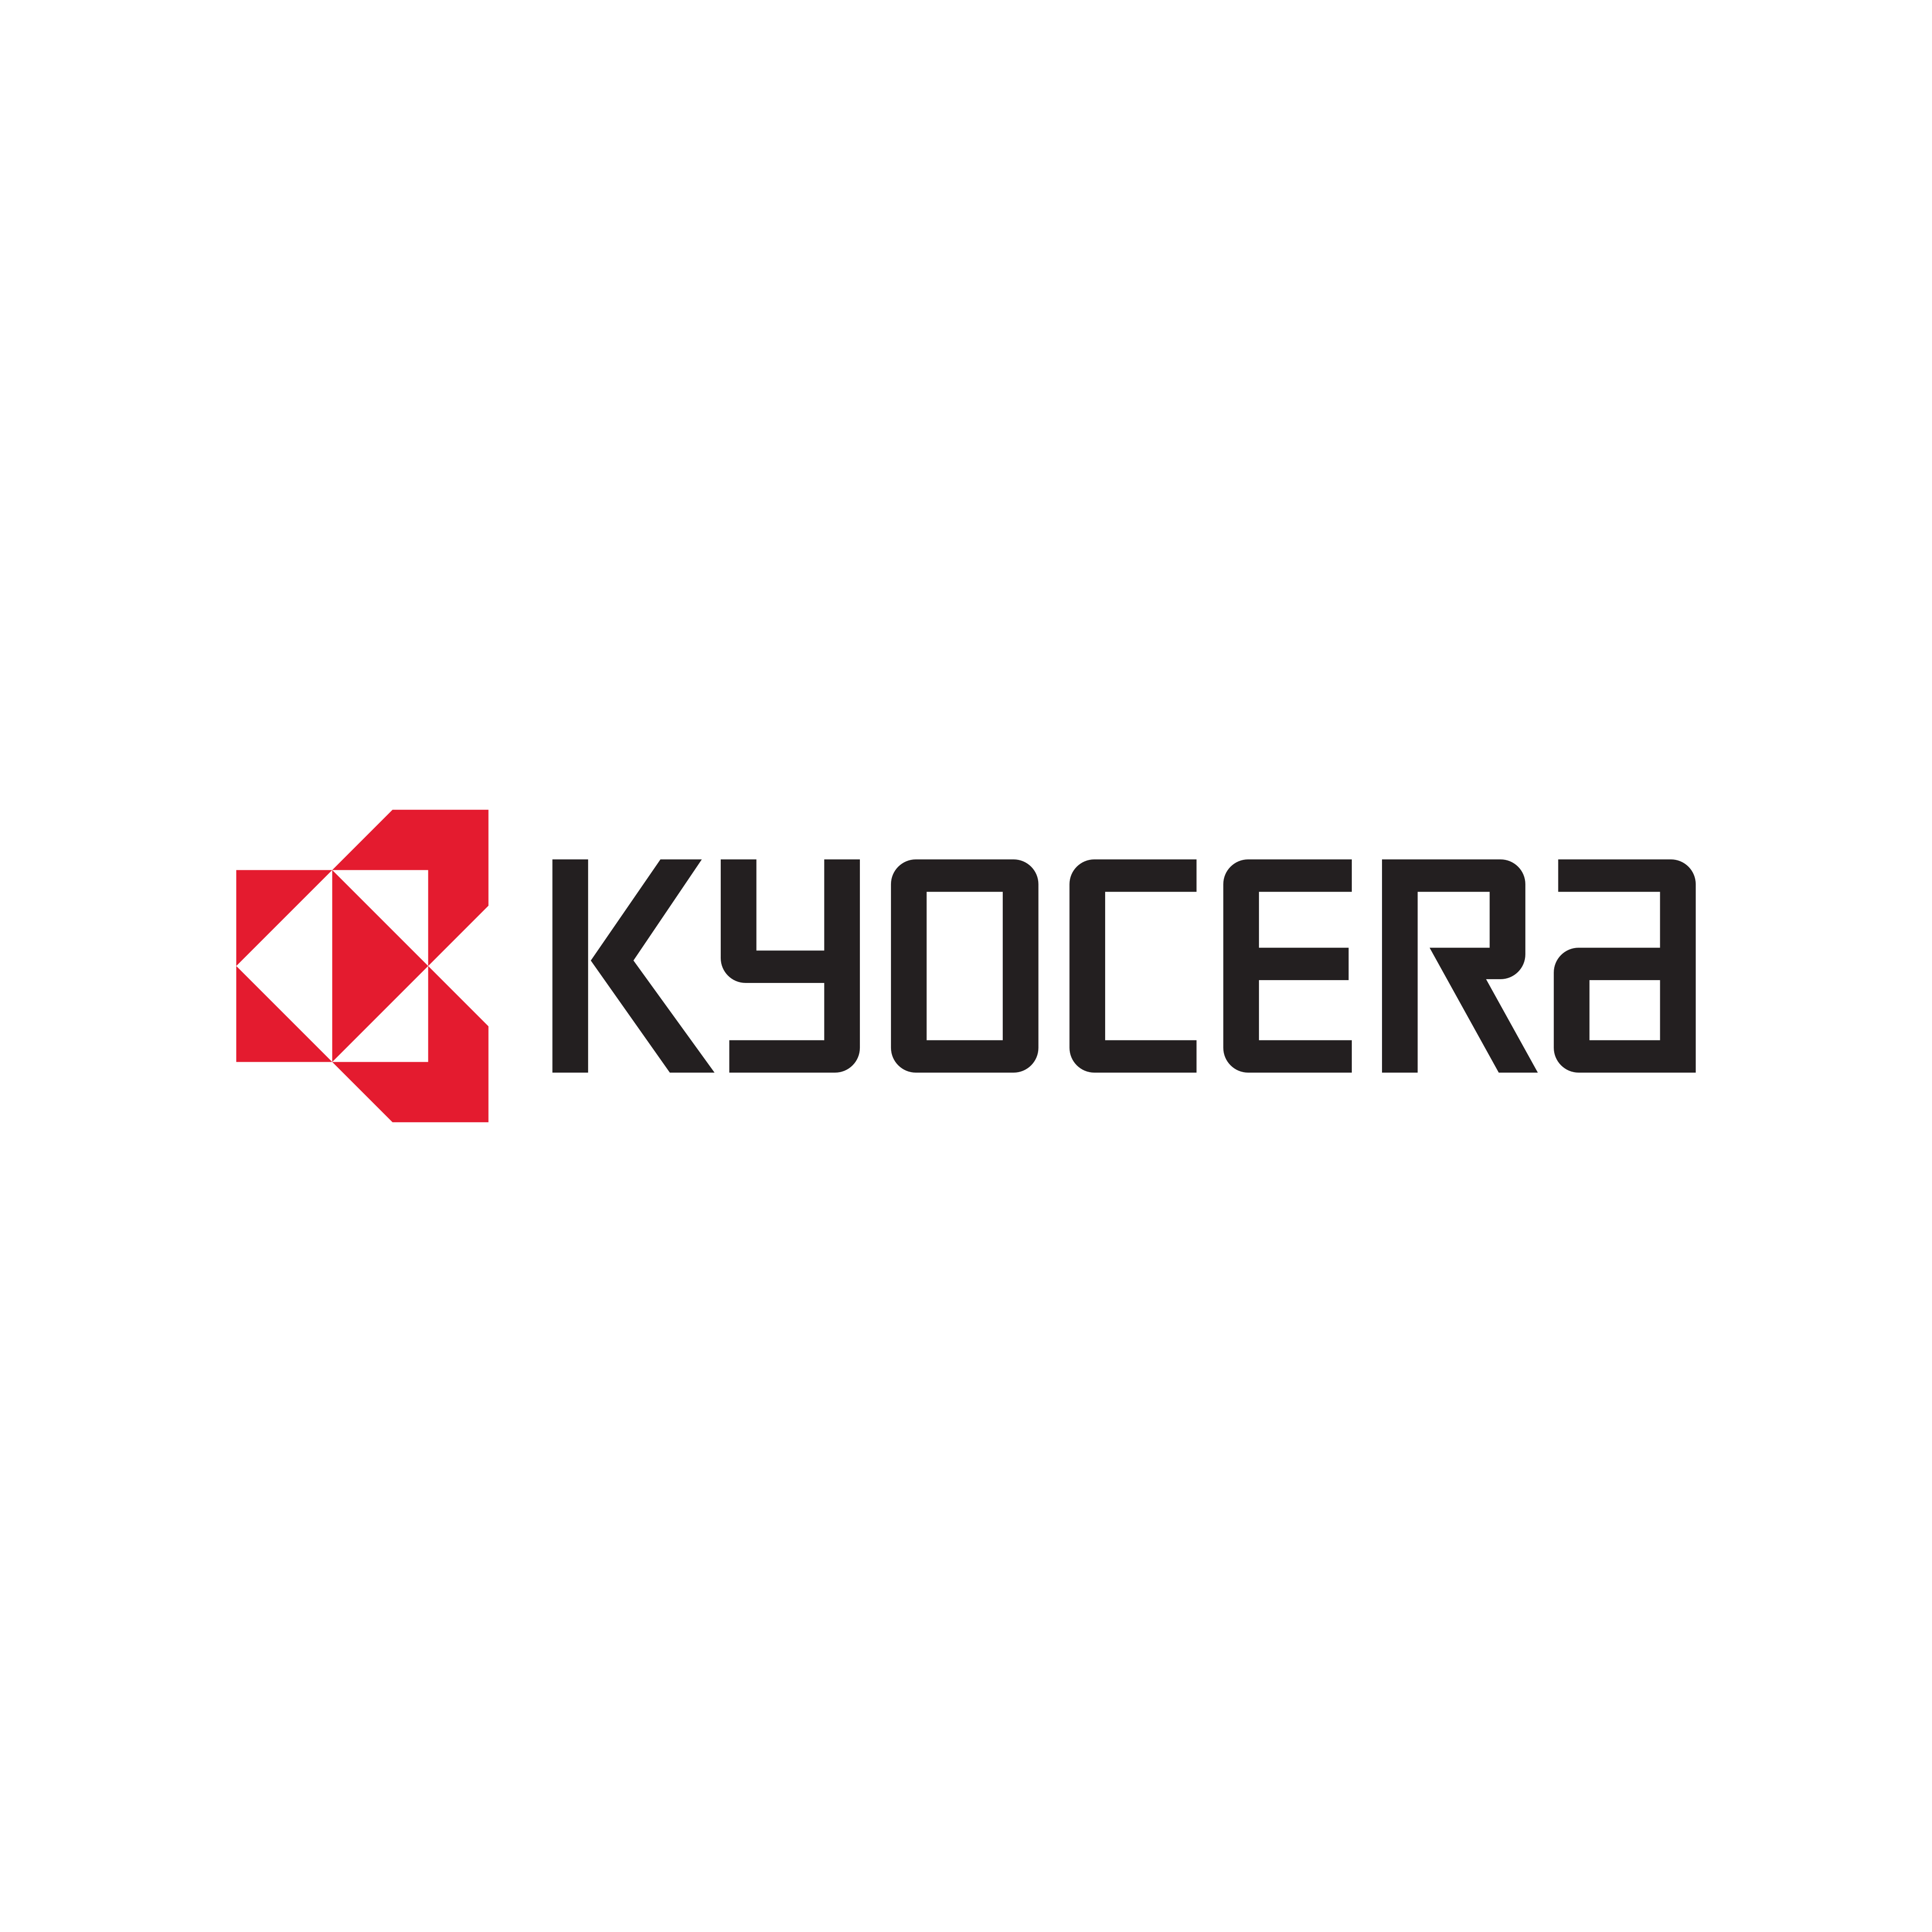 Kyocera Logo PNG.